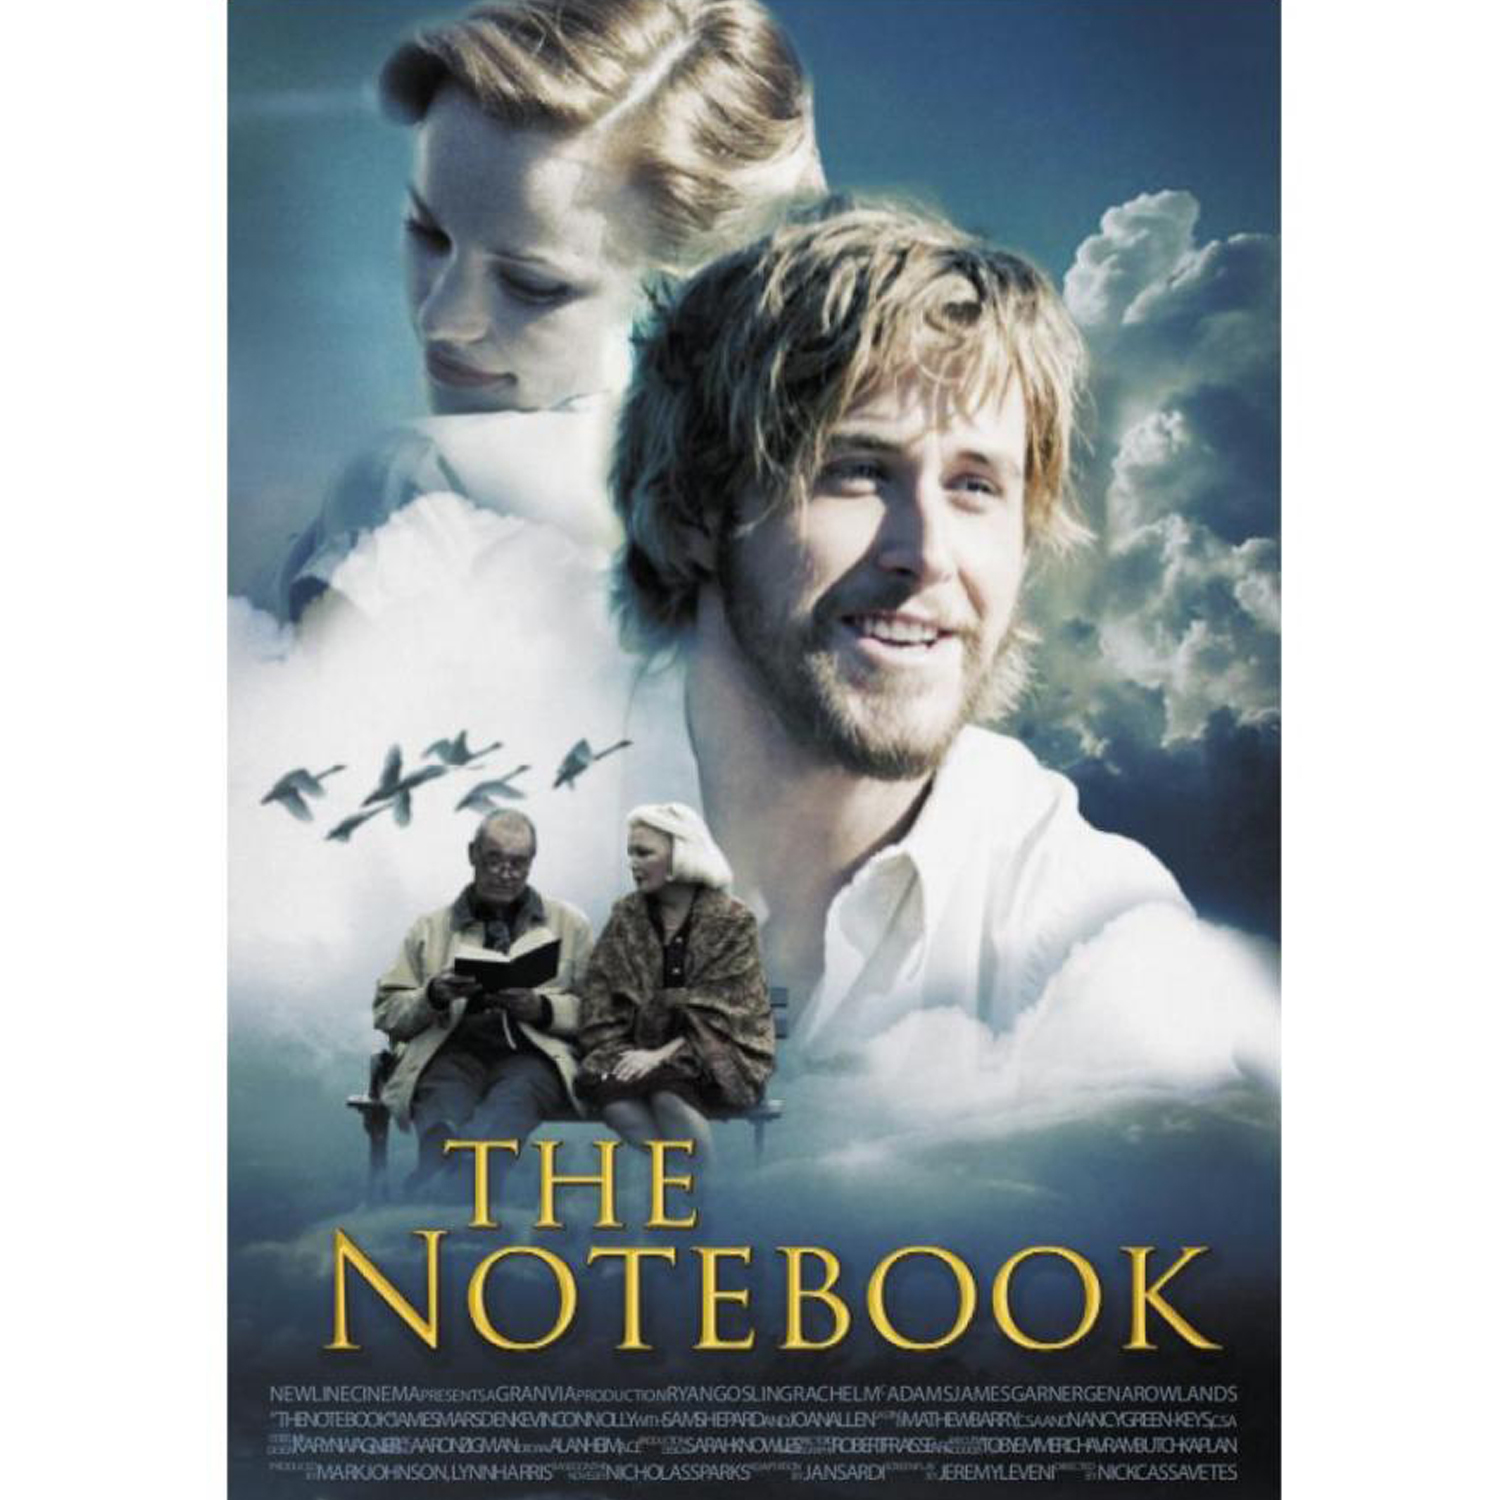 The Notebook (2004) - Ryan Gosling & Rachel McAdams